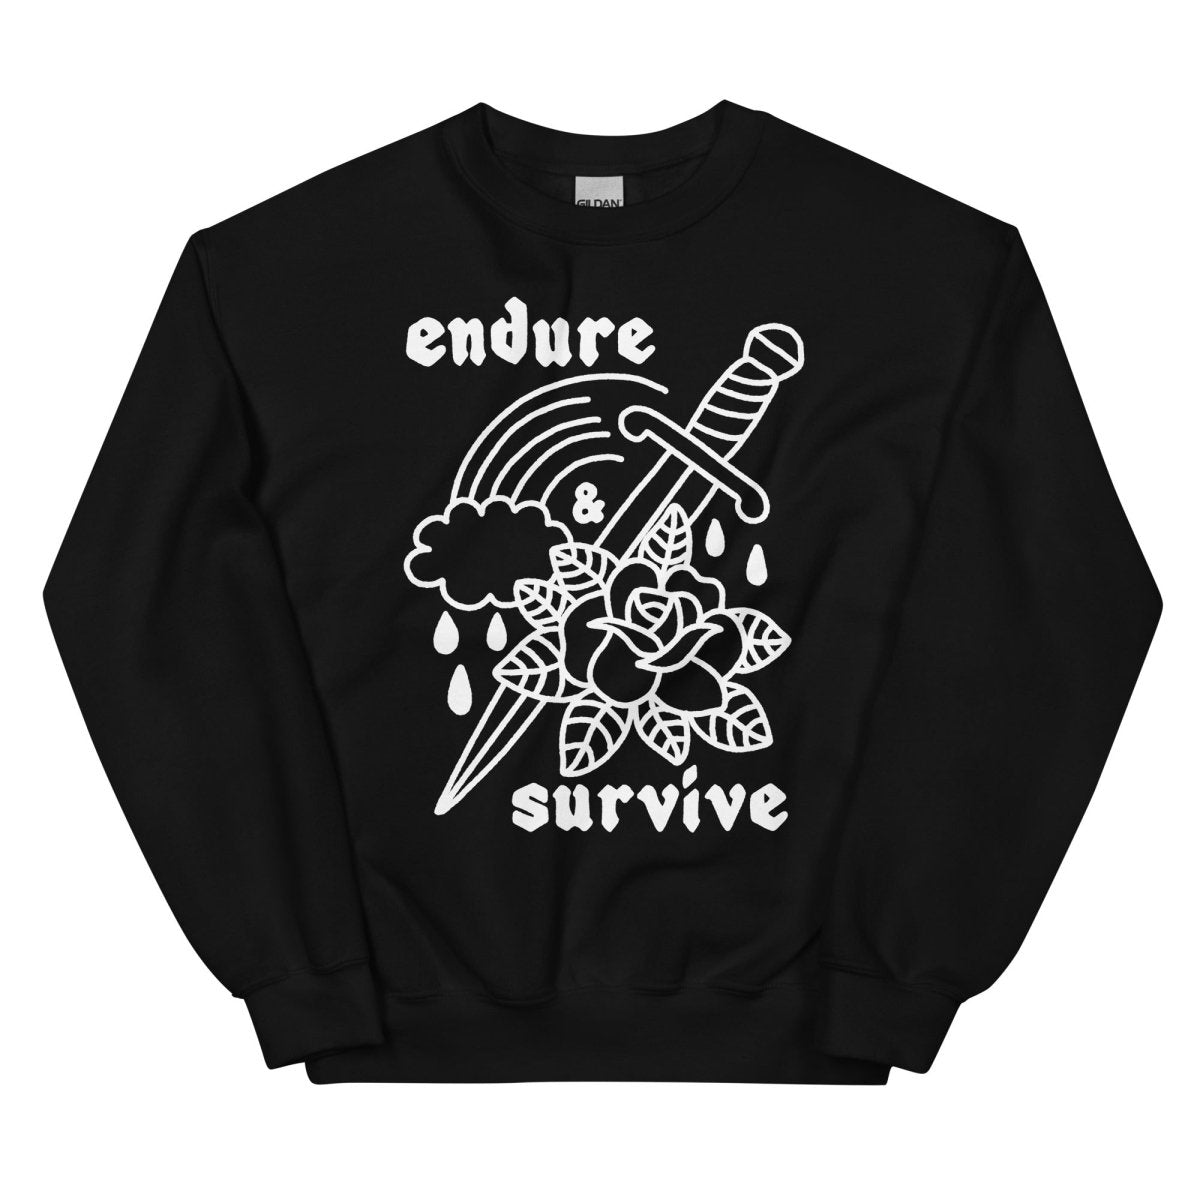 endure & survive sweatshirt - Pretty Bad Co.